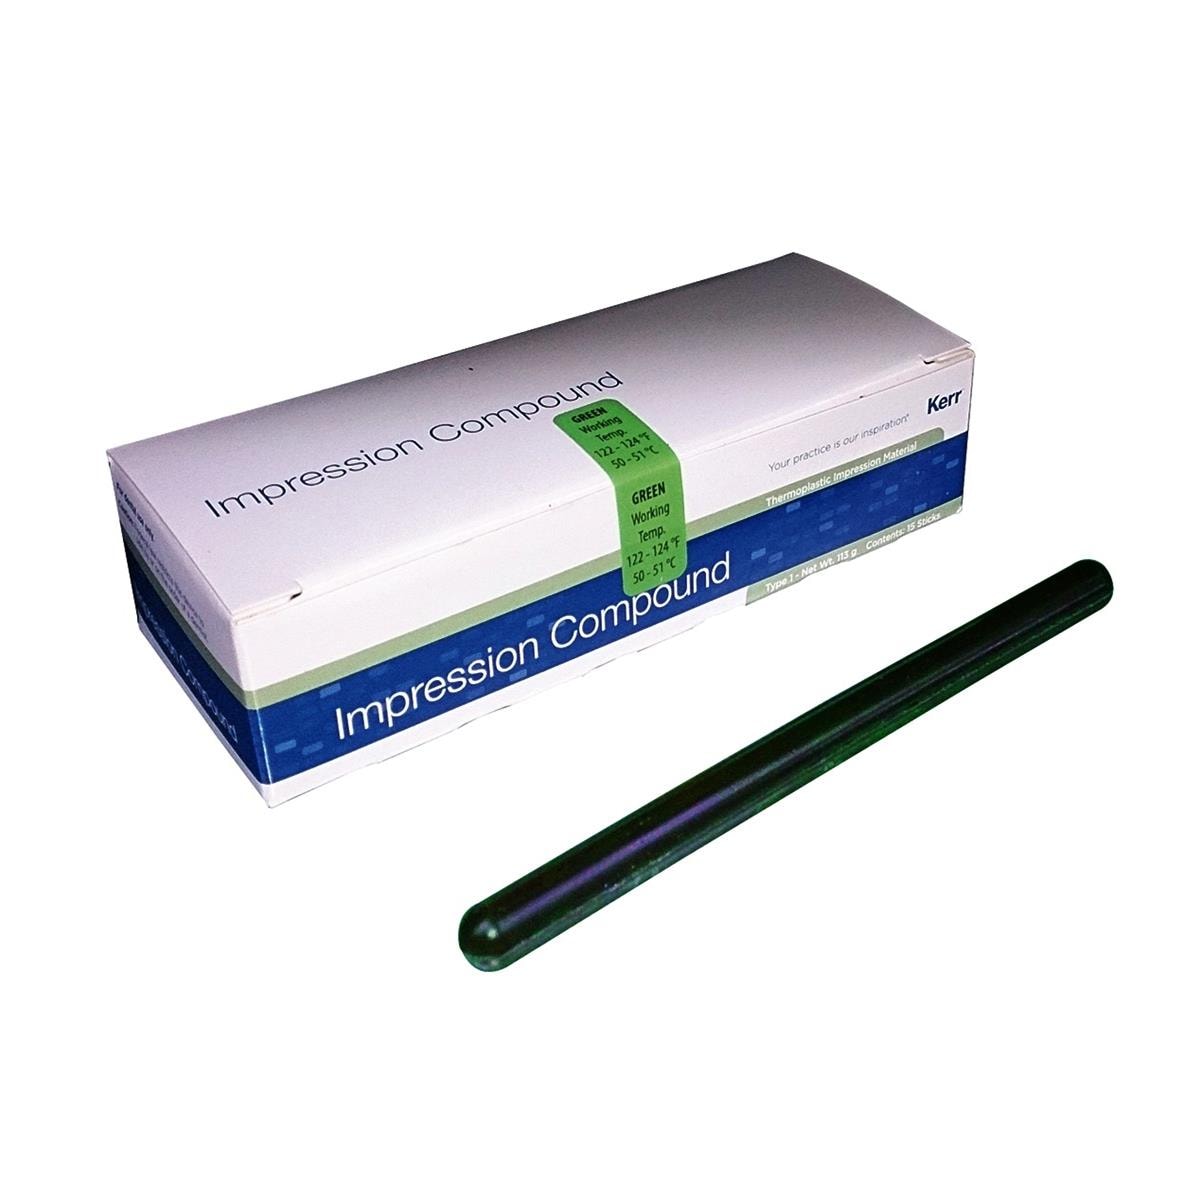 Kerr Impression Compound Sticks Green 15pk